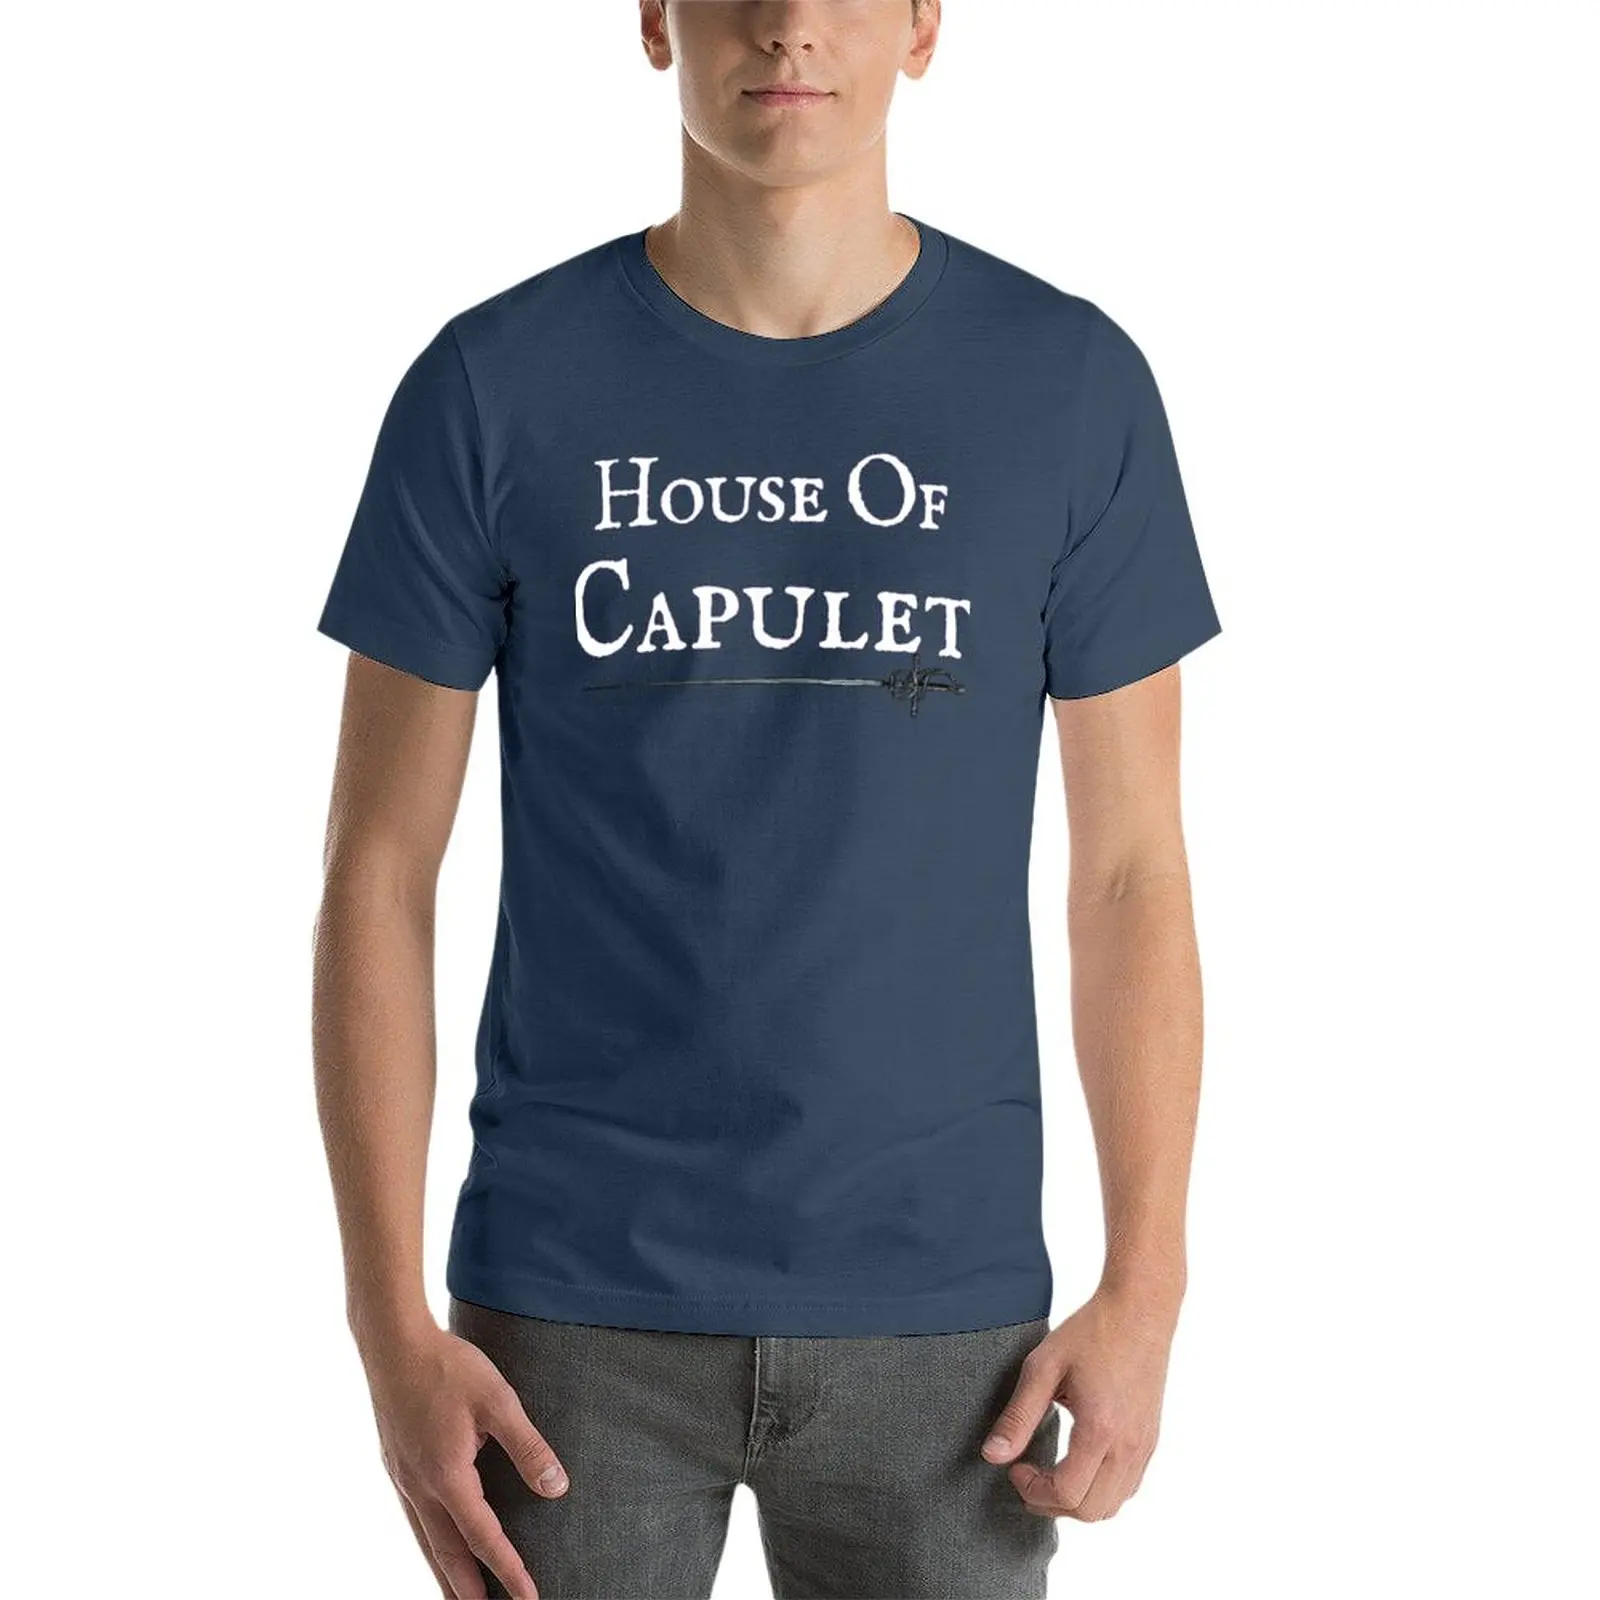 Новая футболка House of Capulet (Light), футболки на заказ, футболки с короткими рукавами в стиле аниме для мужчин Изображение 2